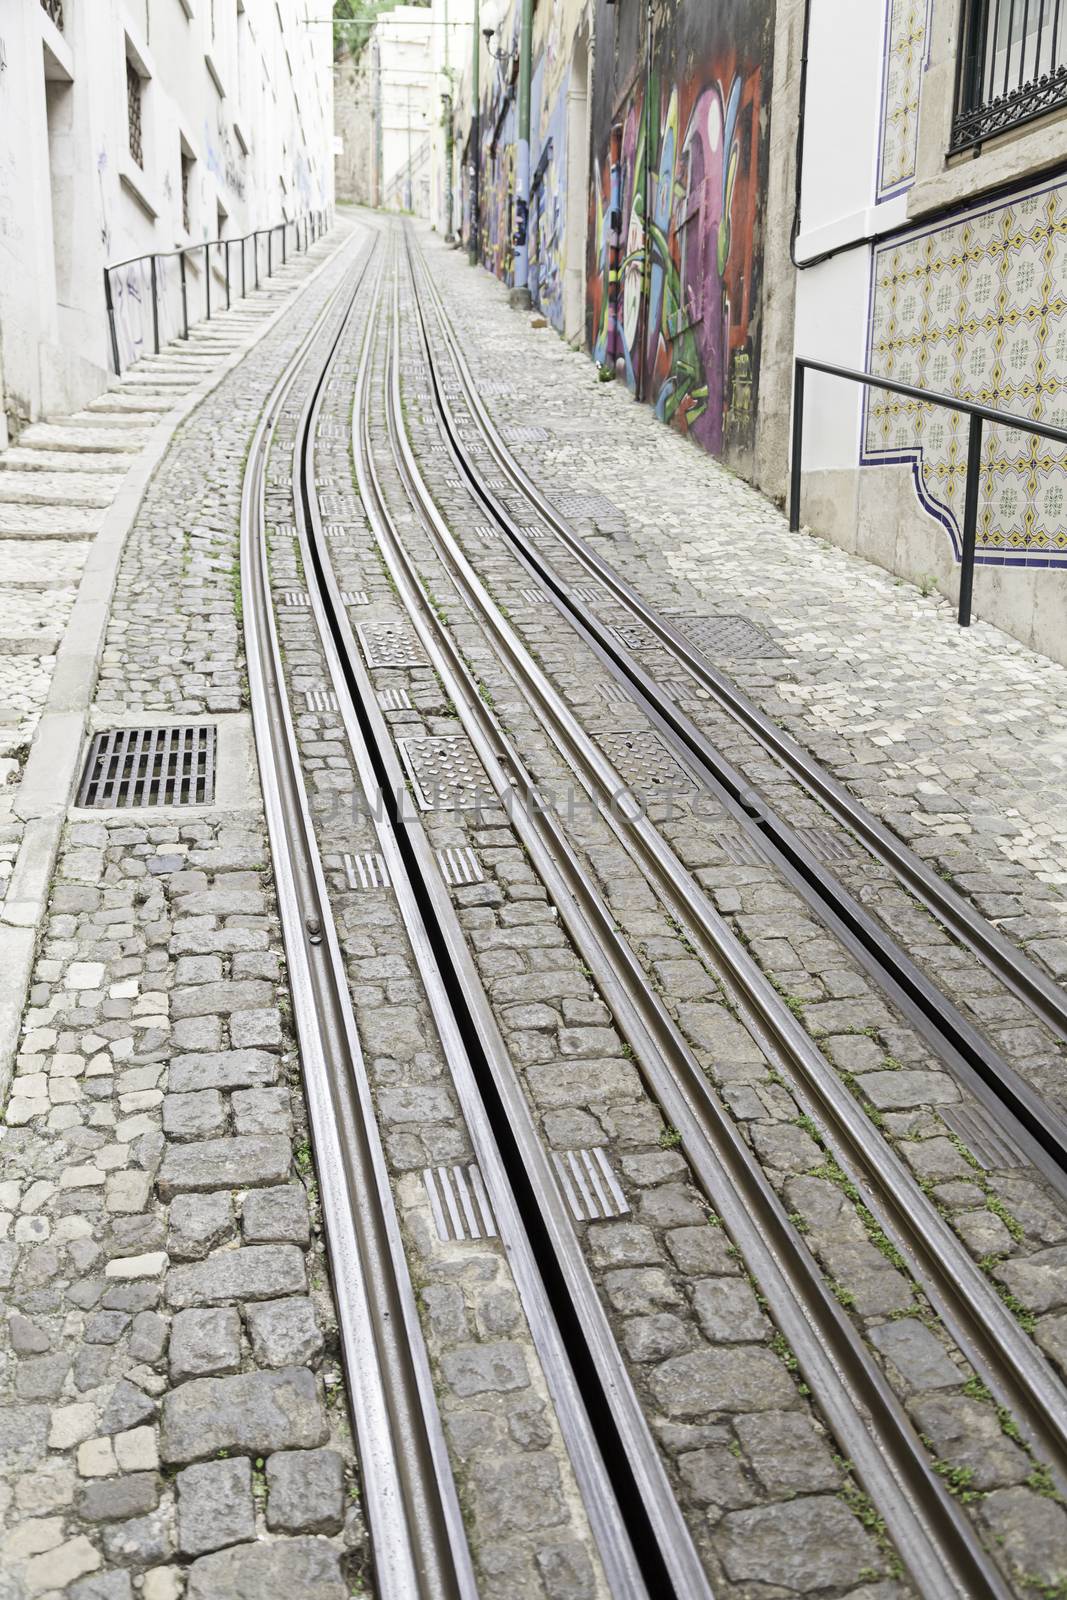 Tram tracks in the city by esebene